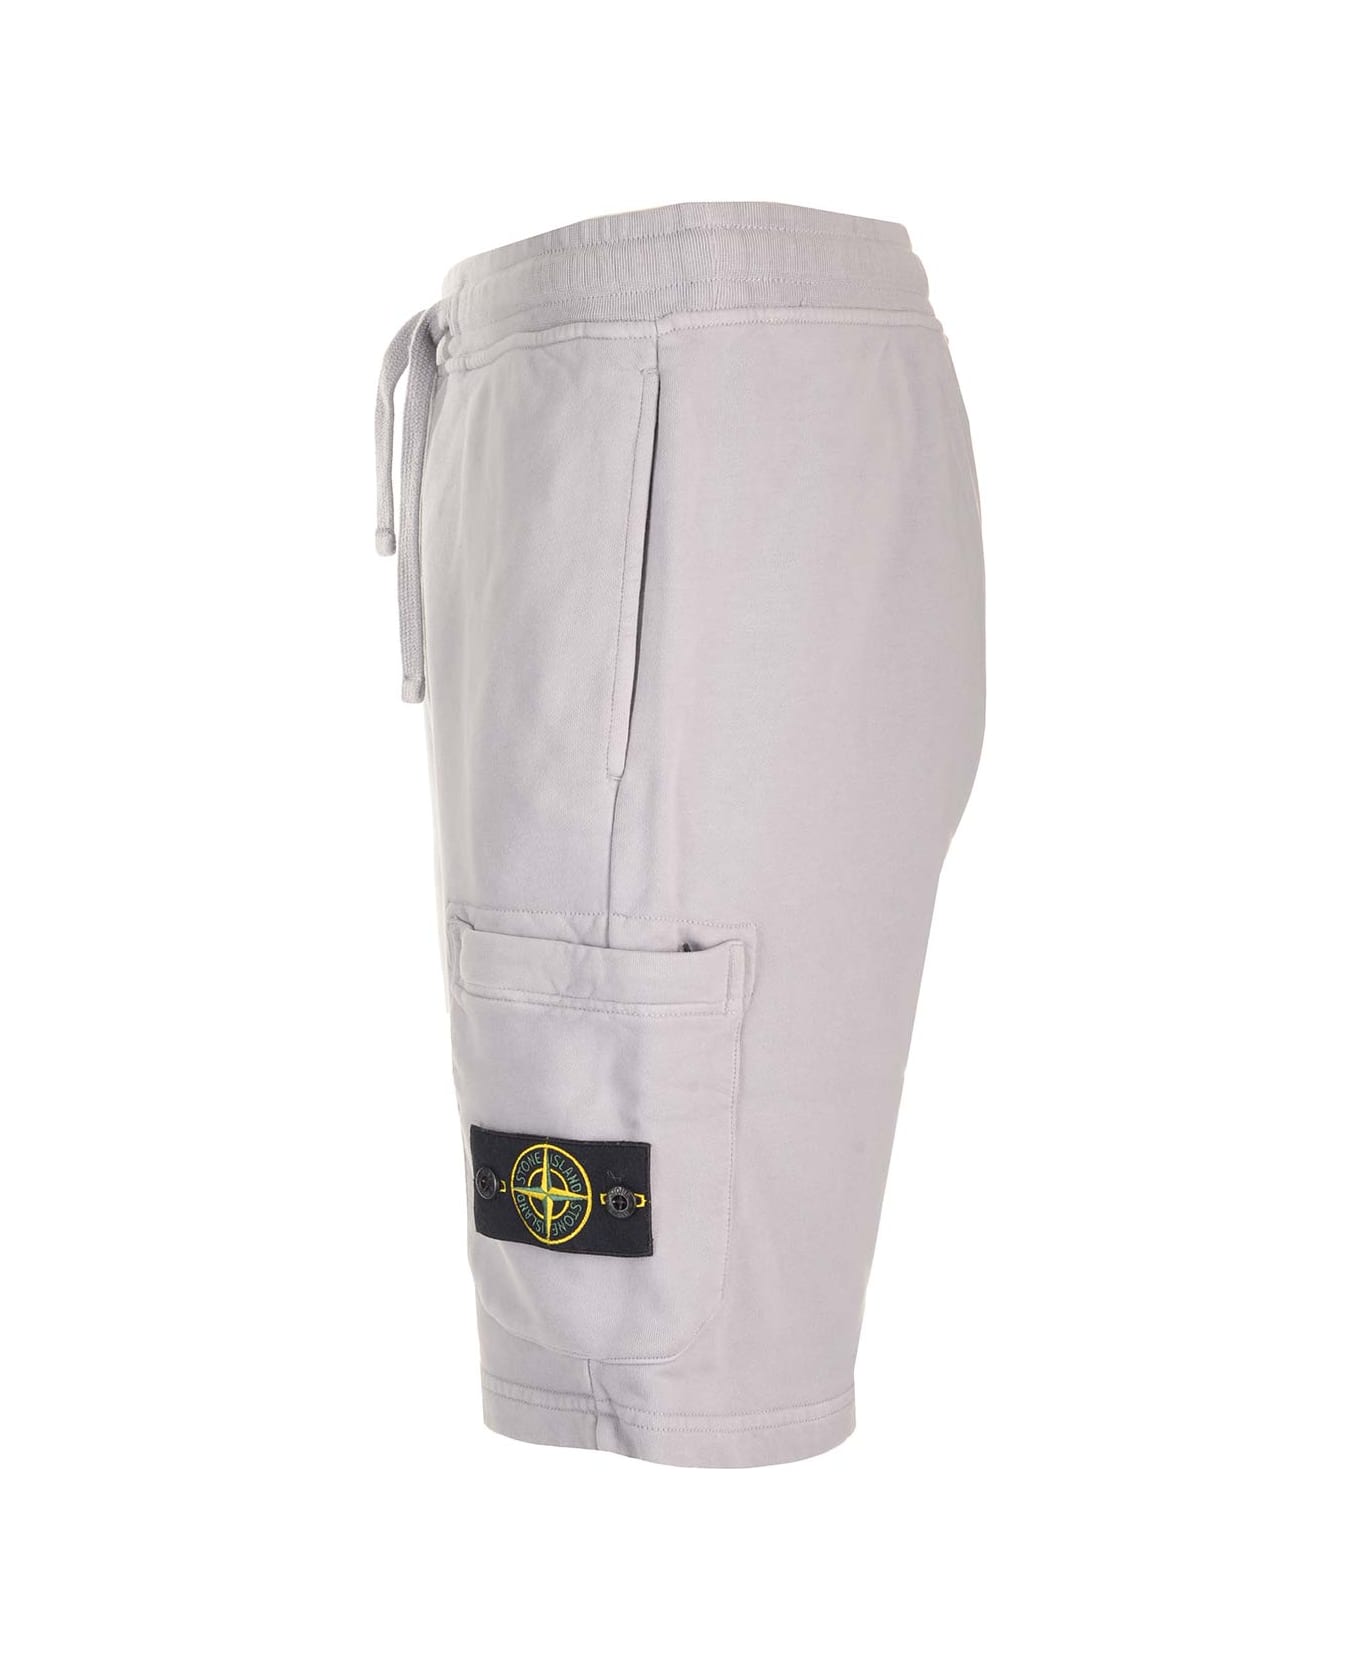 Stone Island Cargo Bermuda Shorts - Grey